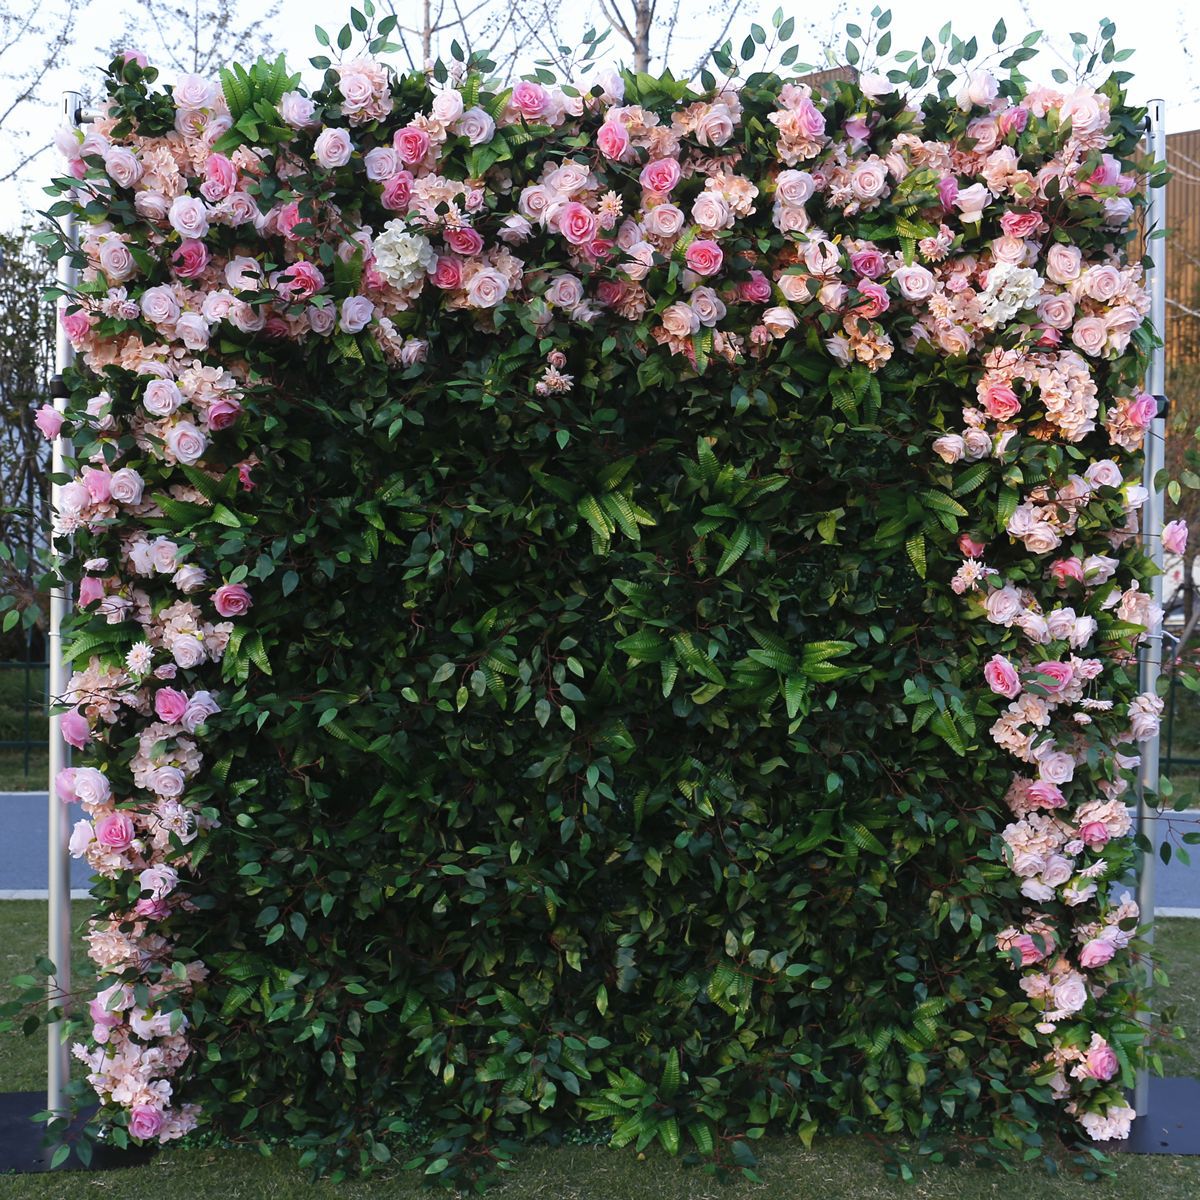 Simulated floral ພື້ນຫລັງກໍາແພງຫີນ planter ສີຂຽວ, ກິດຈະກໍານອກຕົບແຕ່ງ wedding